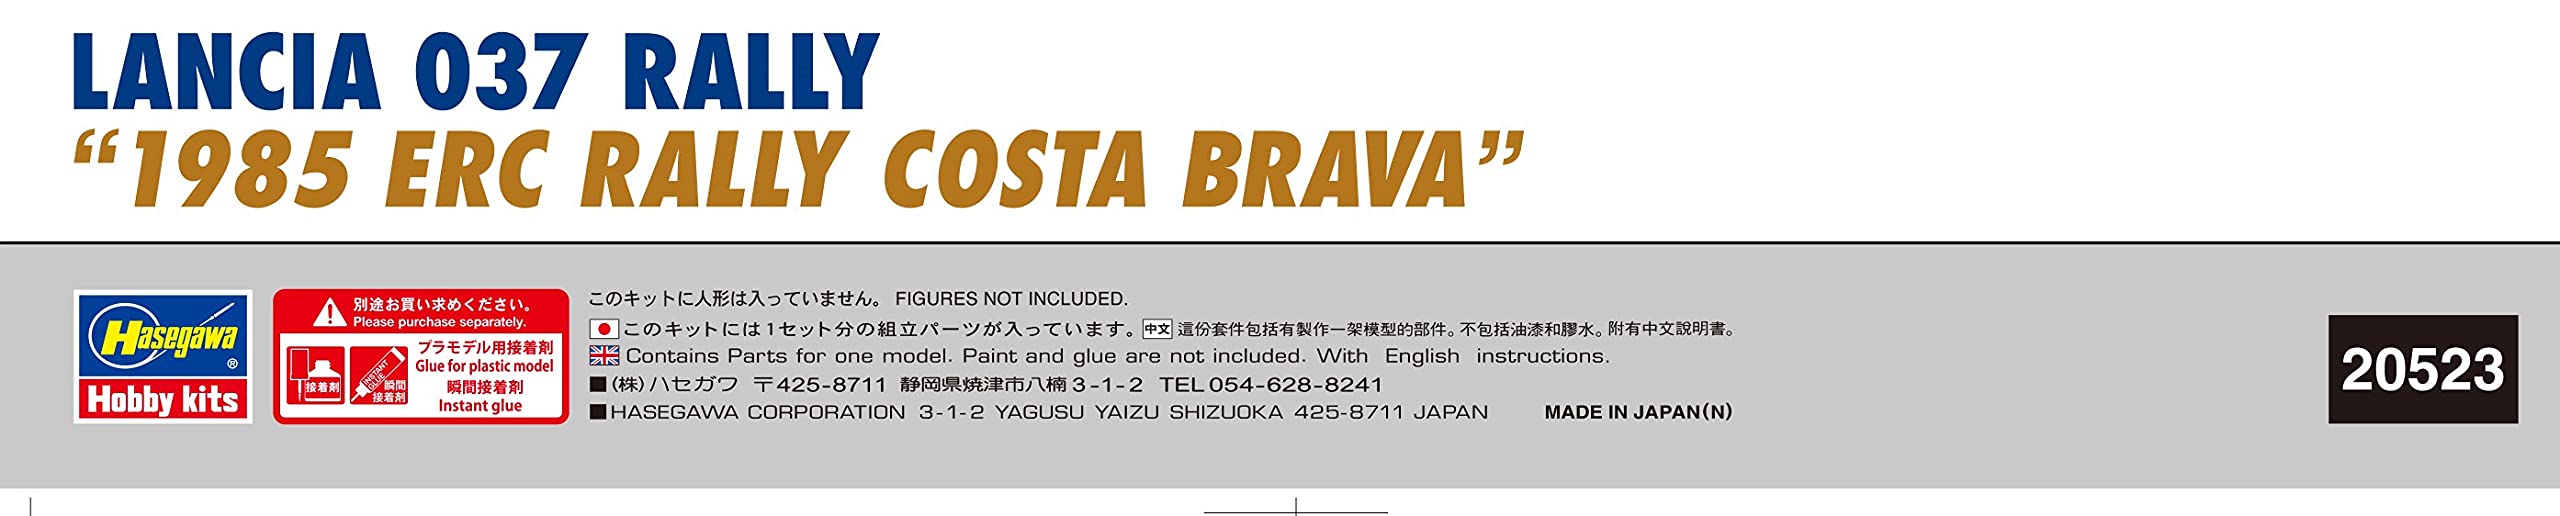 Hasegawa 1/24 LANCIA 037 RALLY 1985 ERC RALLY COSTA BRAVA Model kit ‎HA20523 NEW_4